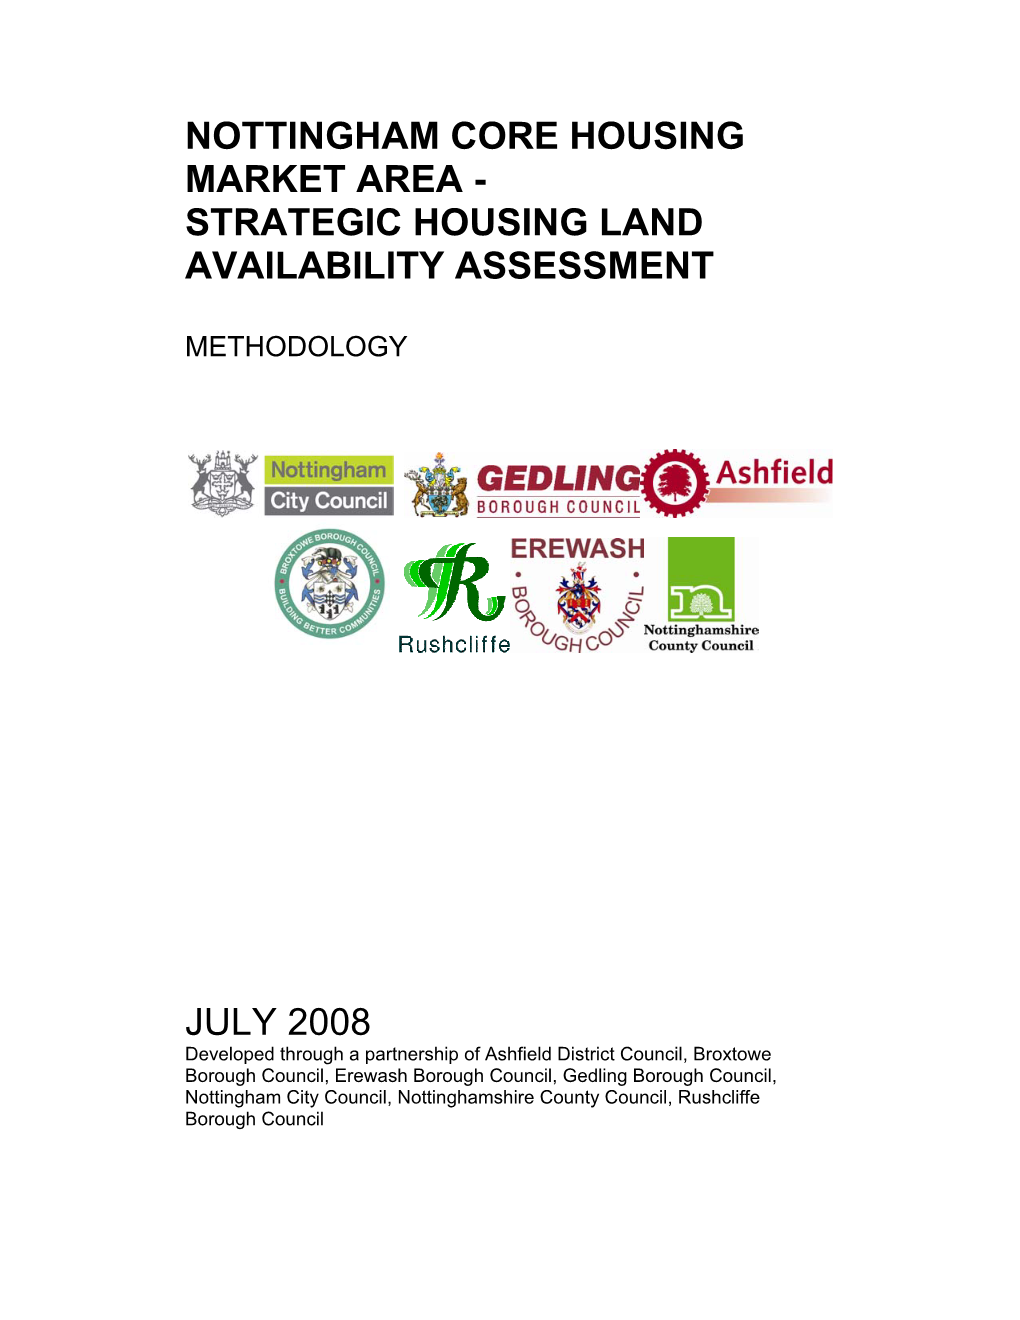 Nottingham Core Housing Market Area - Strategic Housing Land Availability Assessment